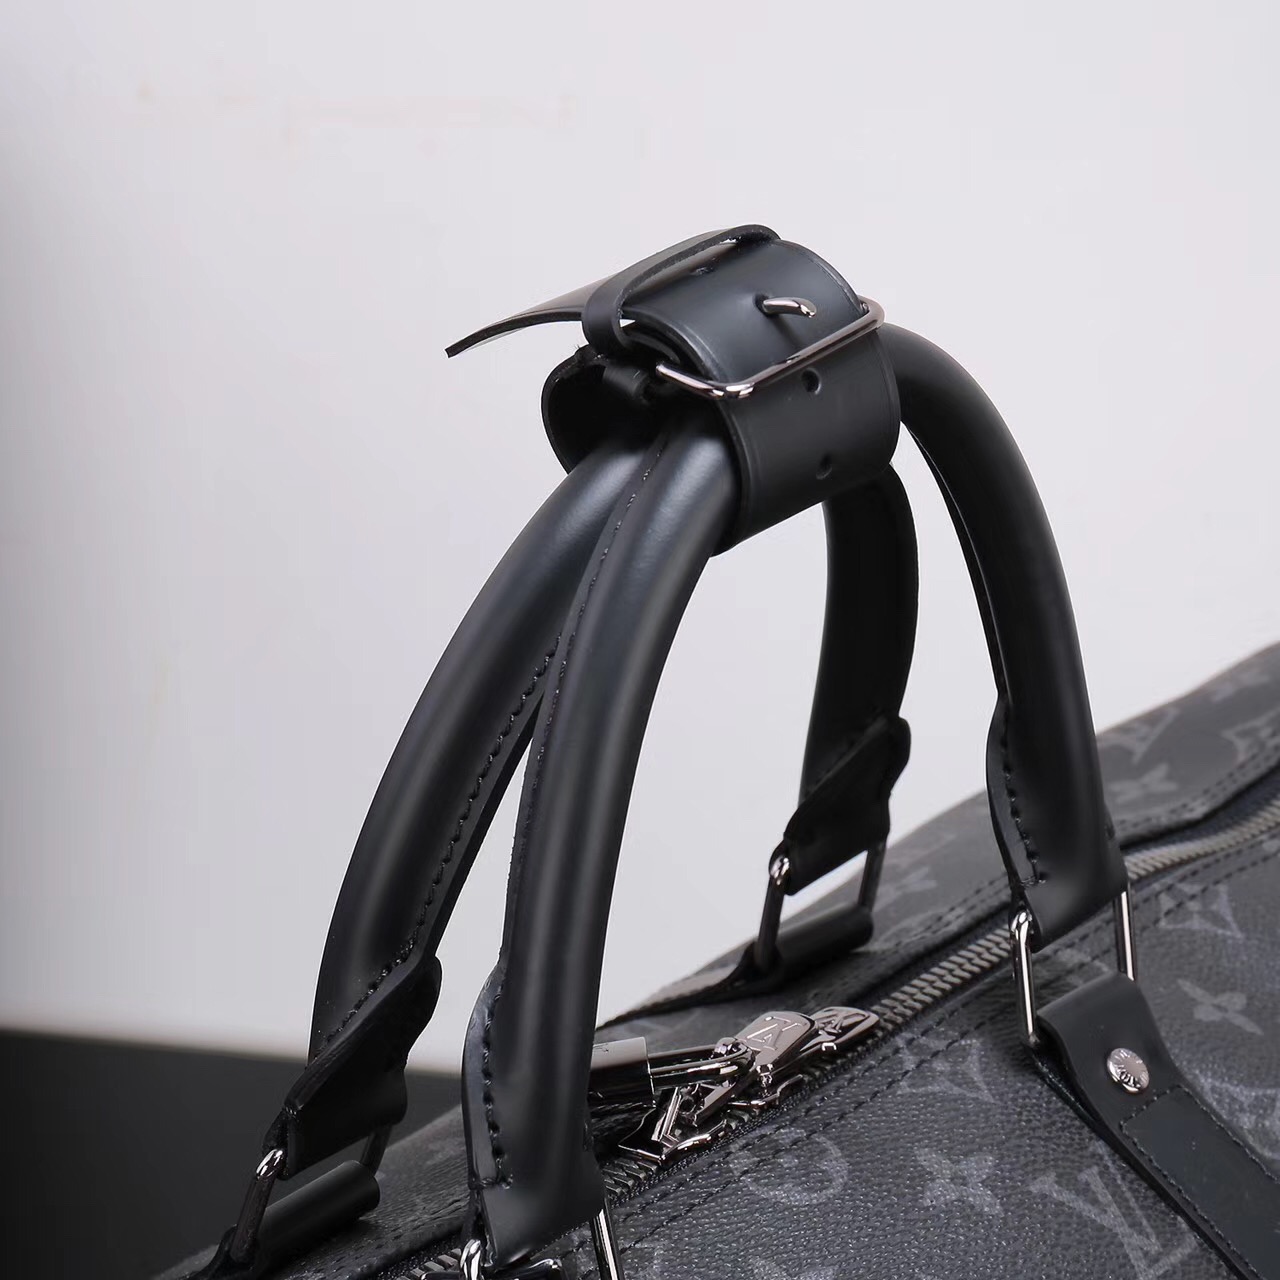 Men LV Louis Vuitton M40603 Keepall 50 Travelling Handbags Monogram bags Gray